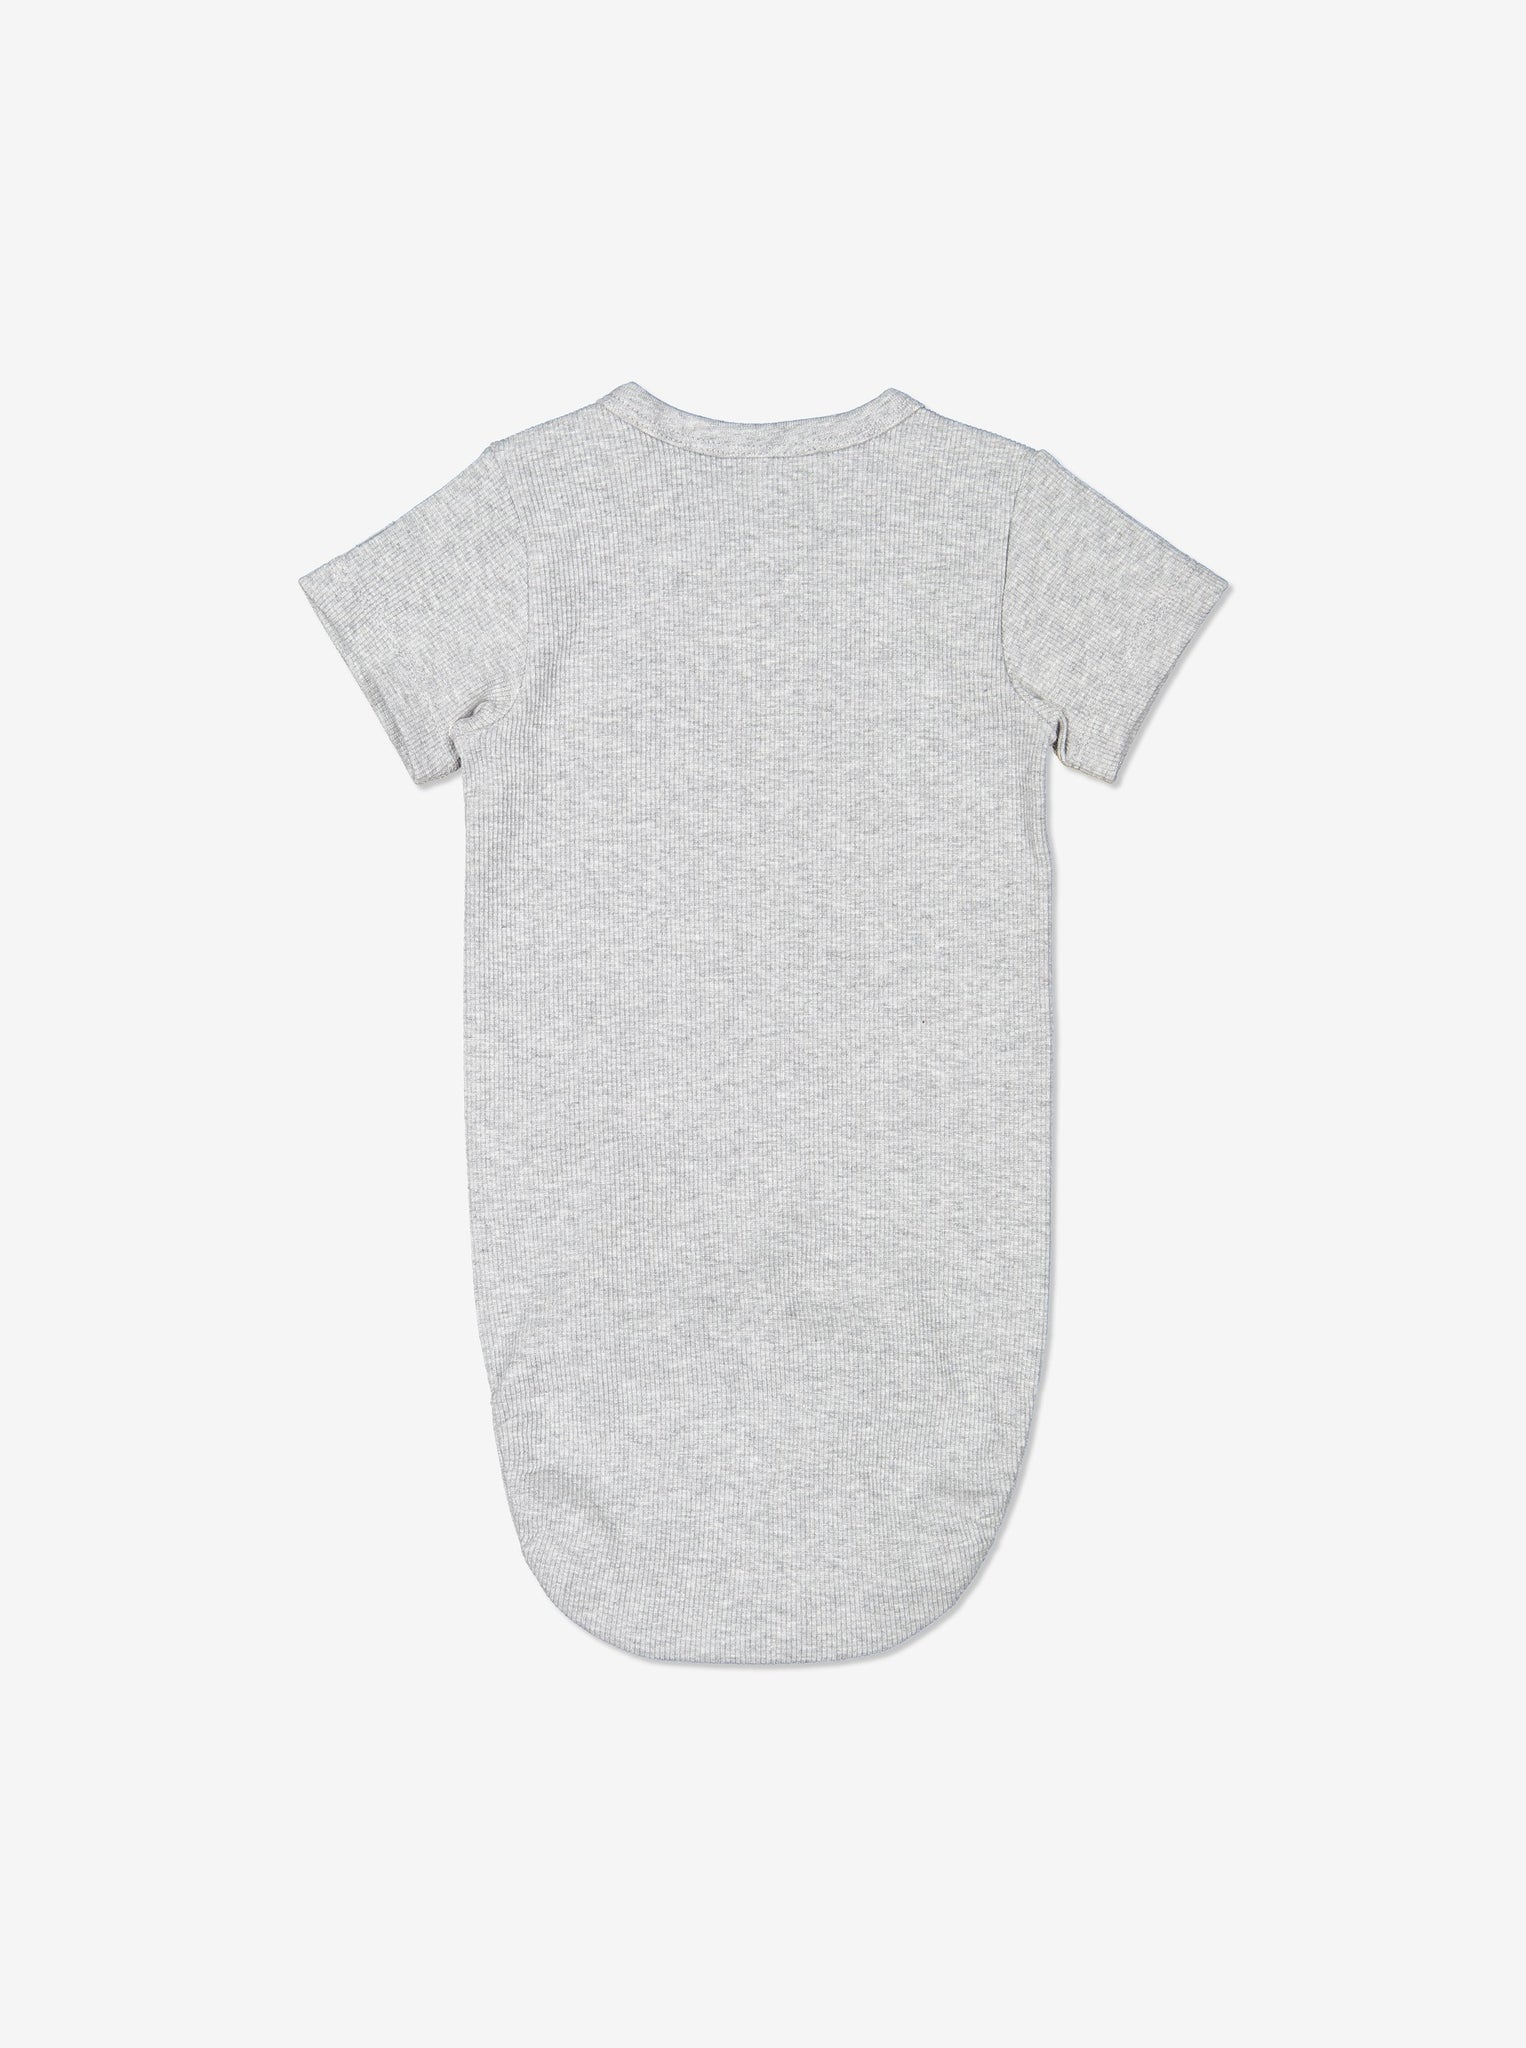 Unisex Grey Organic Cotton Newborn Baby Bodysuit